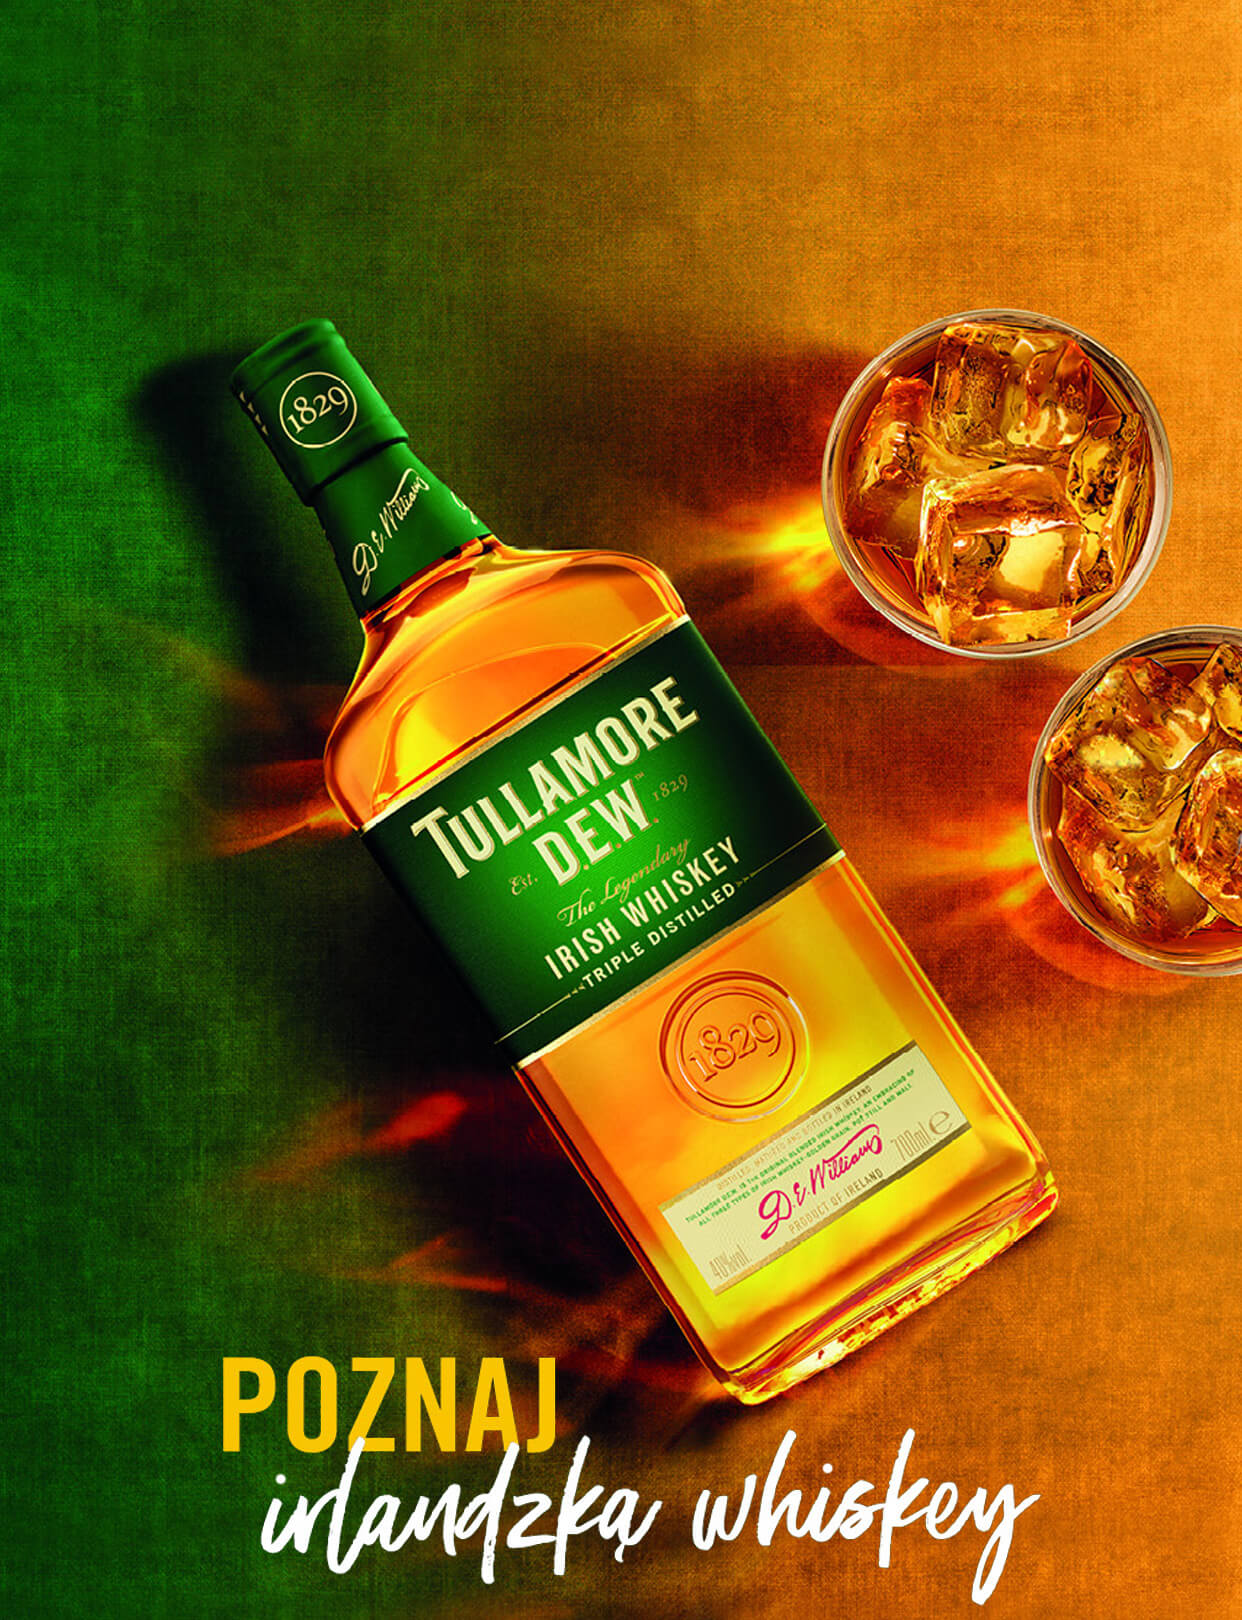 Poznaj irlandzką whiskey TULLAMORE D.E.W.